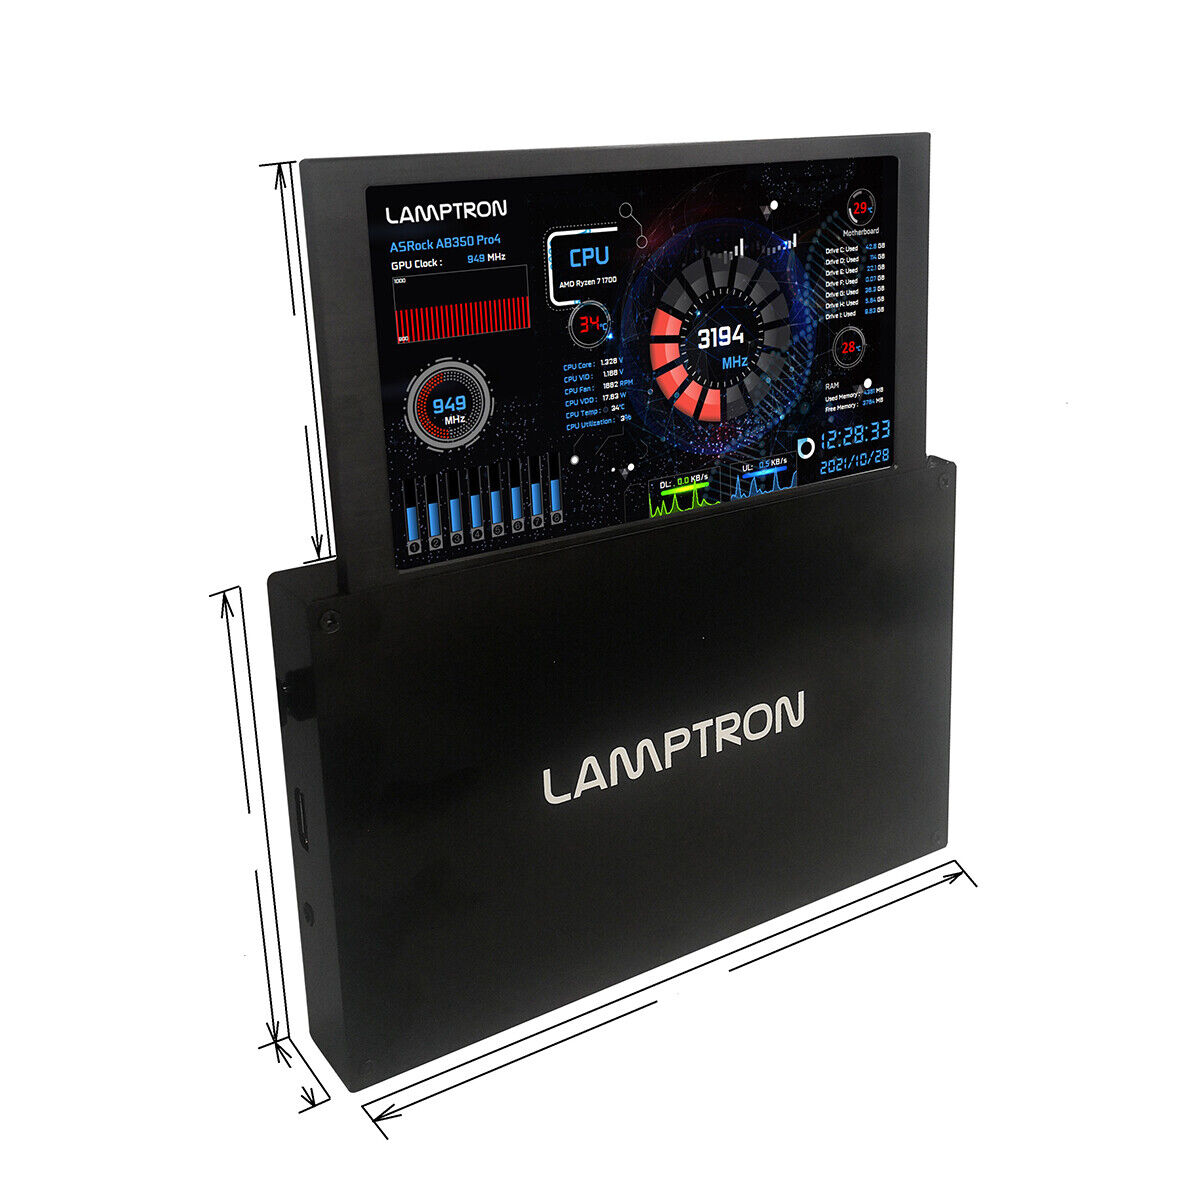 Lamptron HM070 Lift PC Hardware Monitor, 7" LCD Display